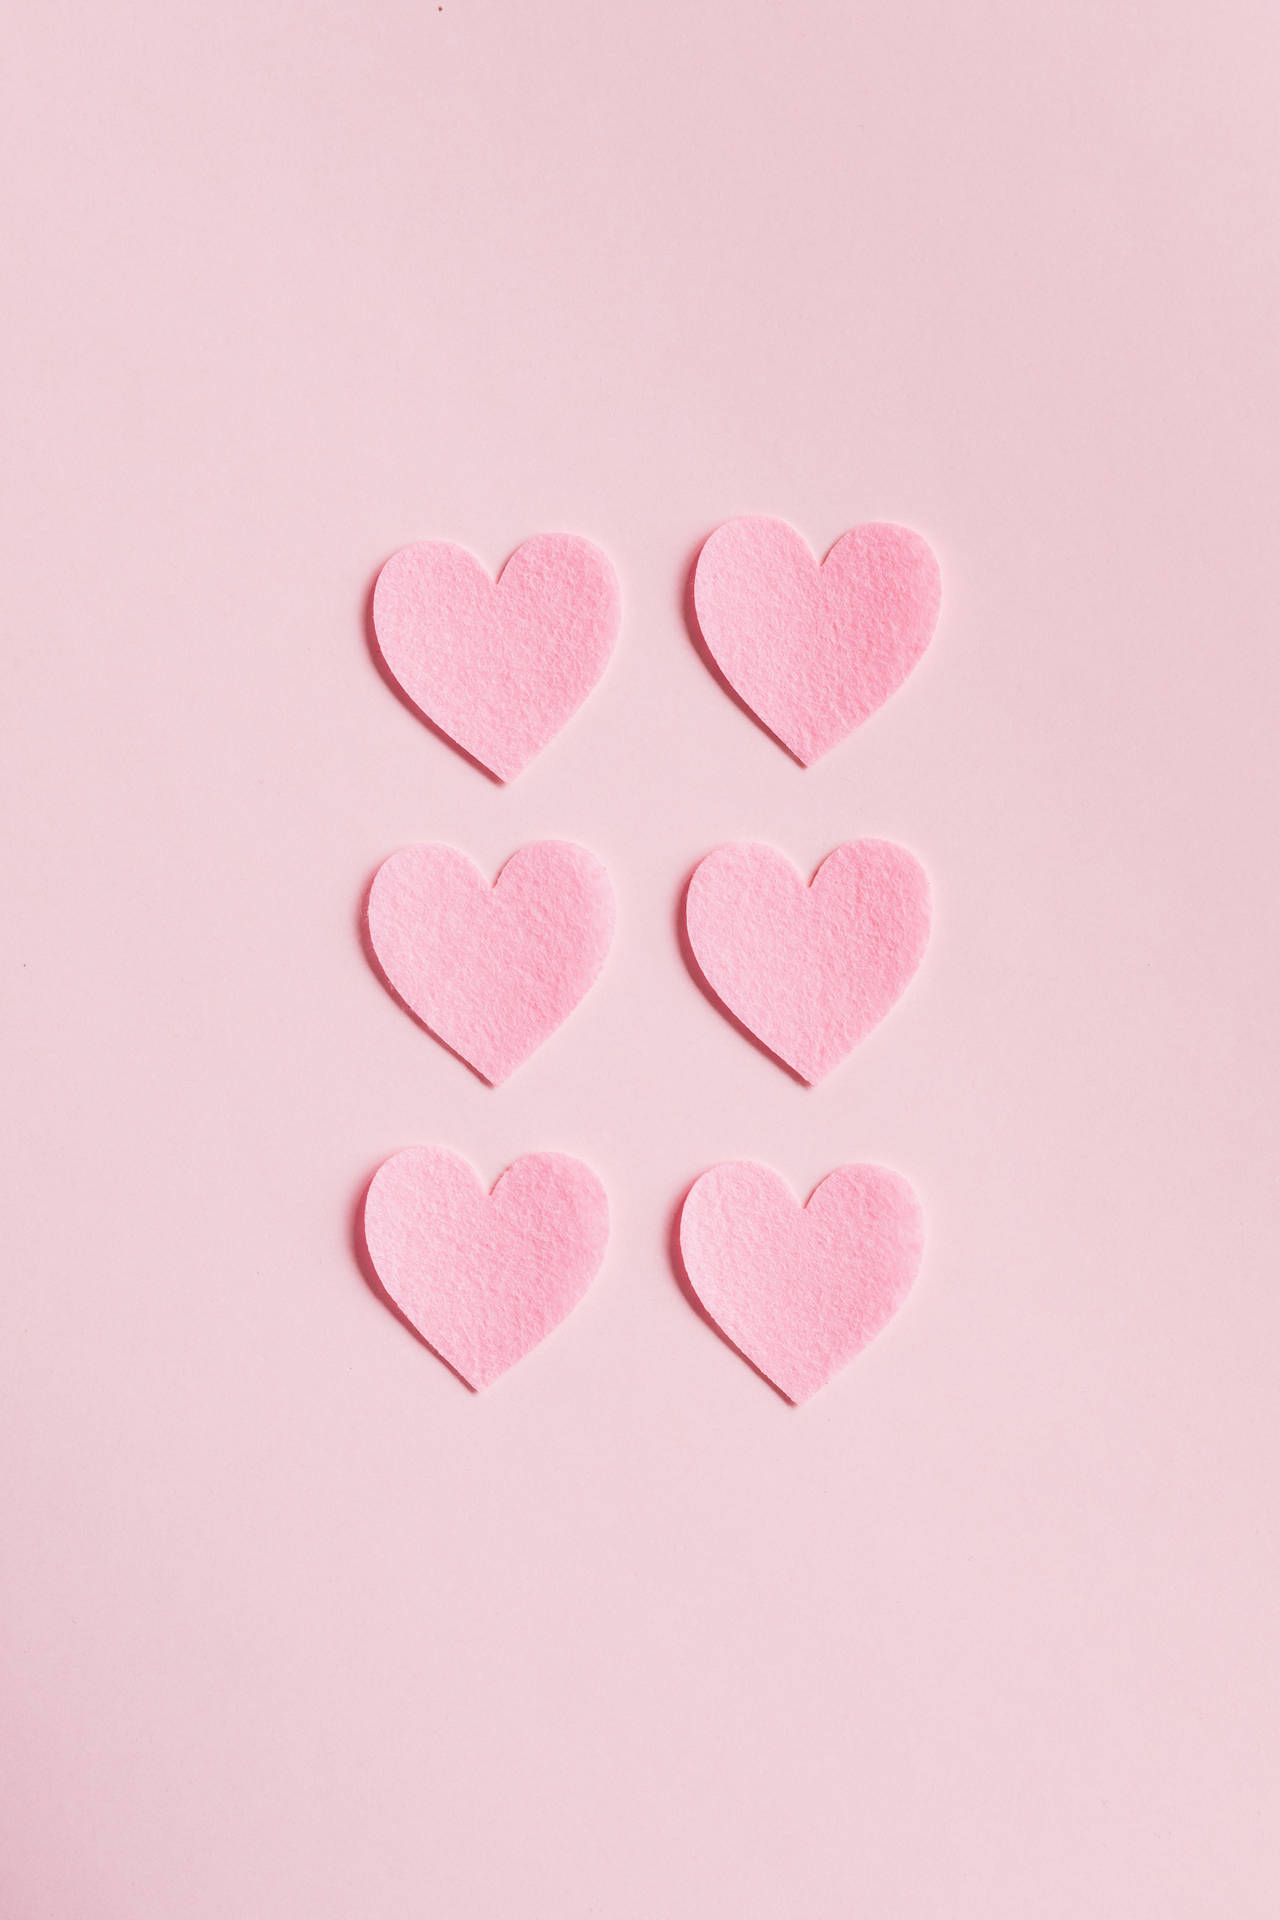 Minimalist Hearts On Pastel Pink Colors